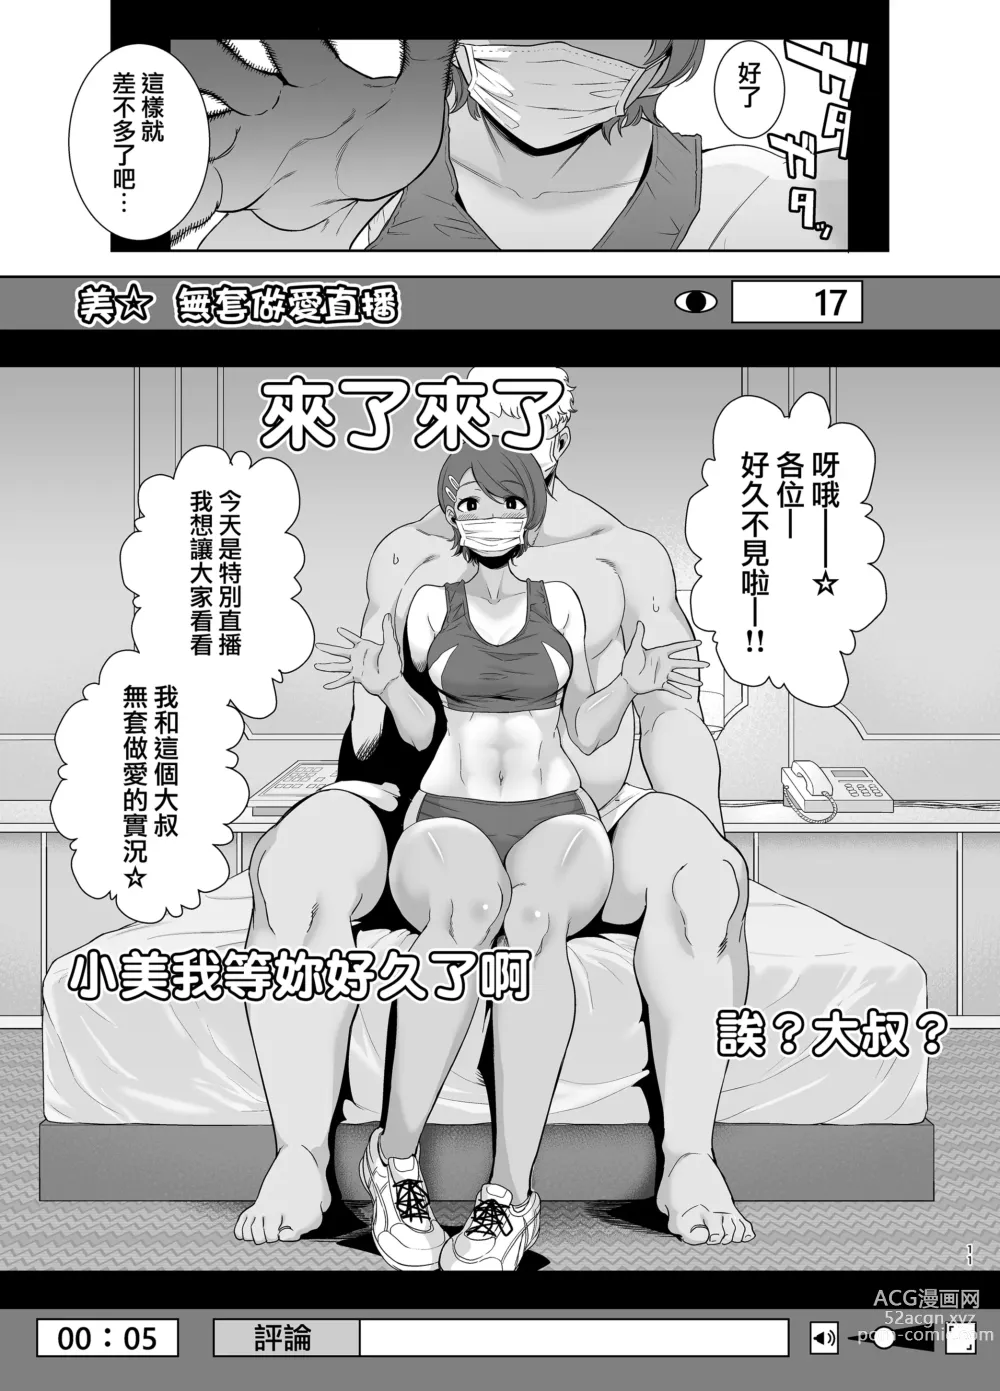 Page 11 of manga 聖華女学院高等部公認竿おじさん 2